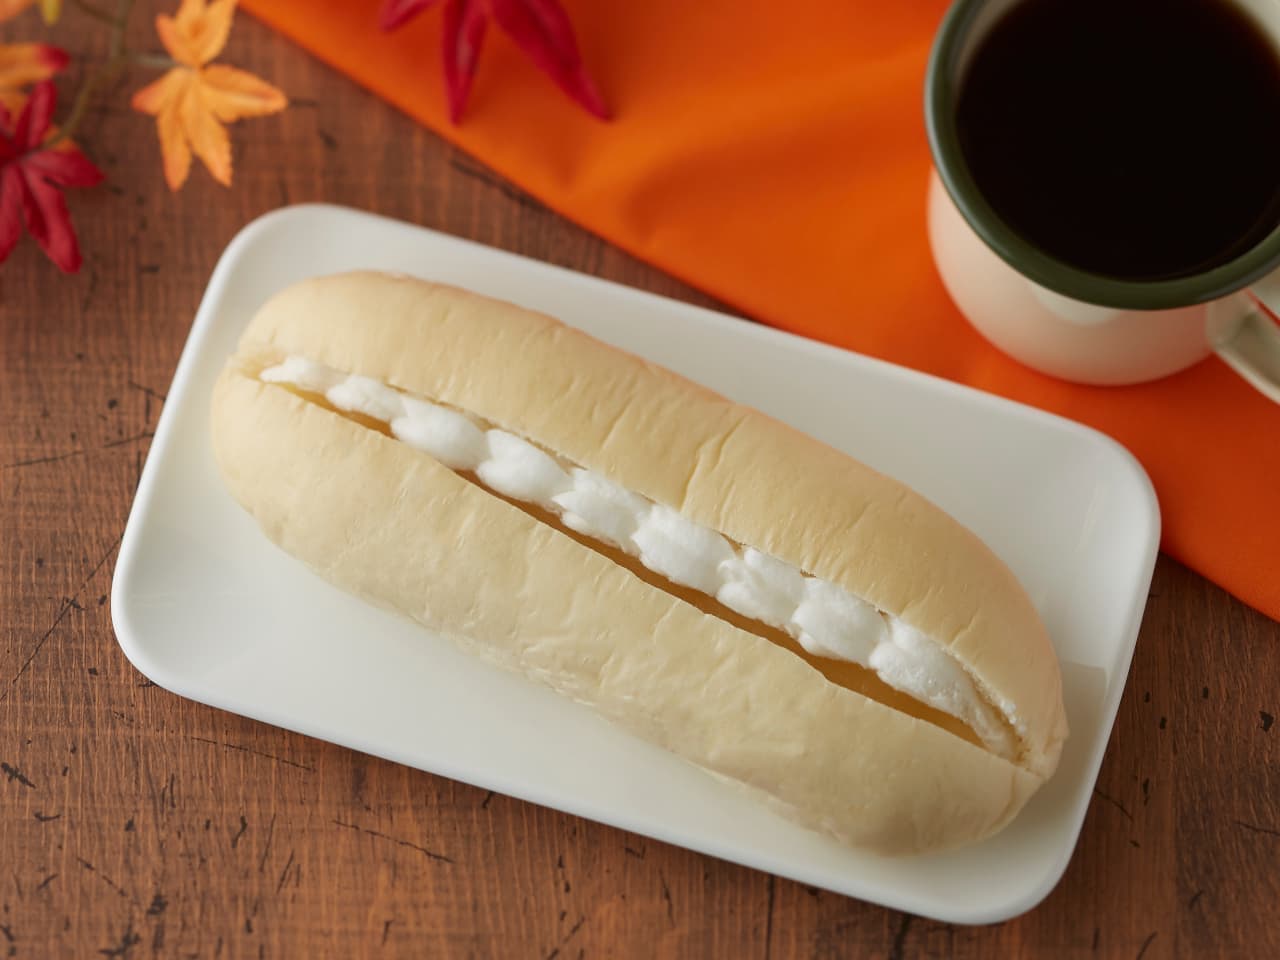 MINISTOP Bread rolls with Oyomoto milk whip